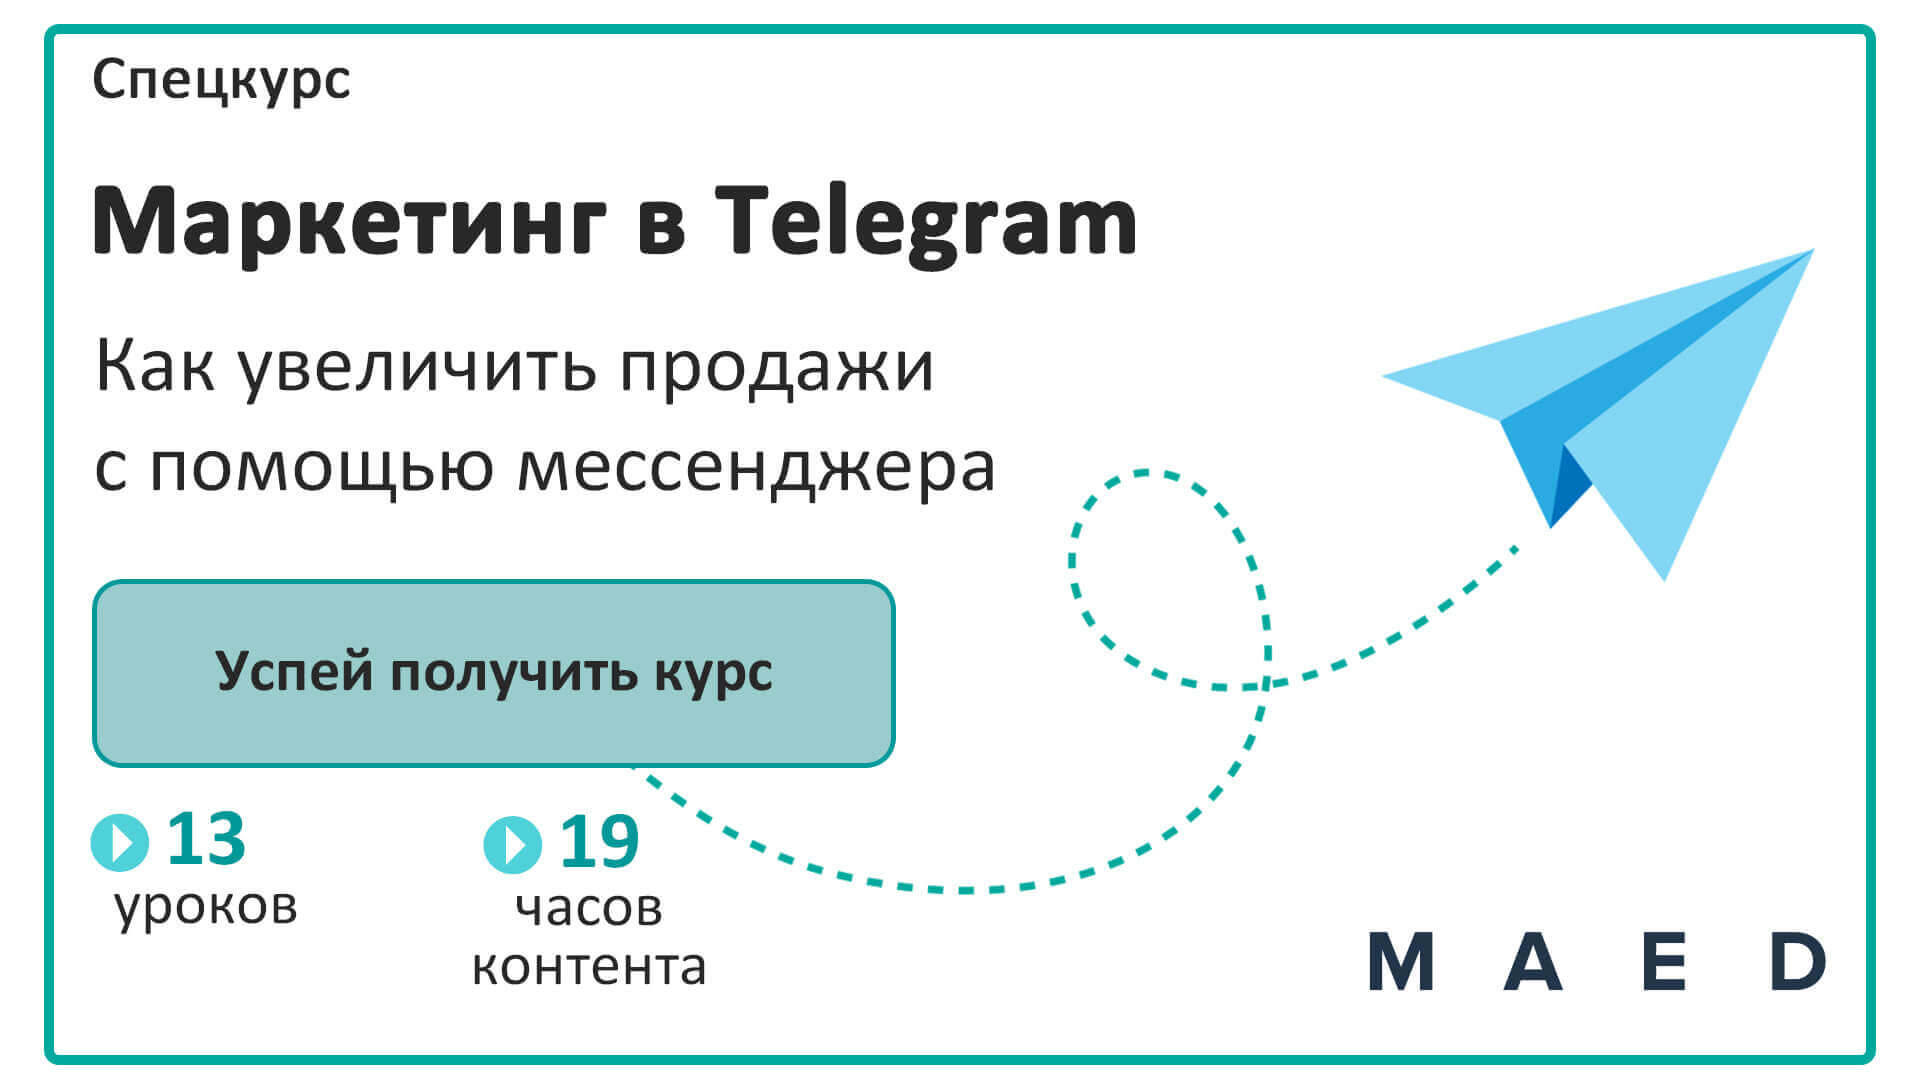 MAED Аcademy — Маркетинг в Telegram